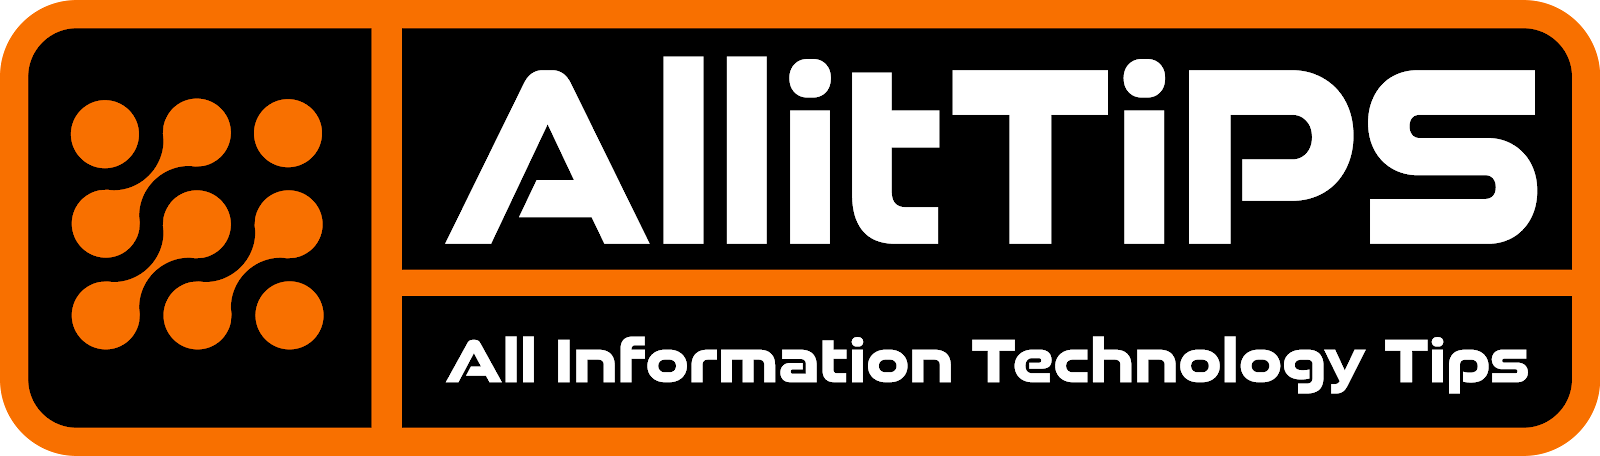 AllitTips - All Information Technology Tips